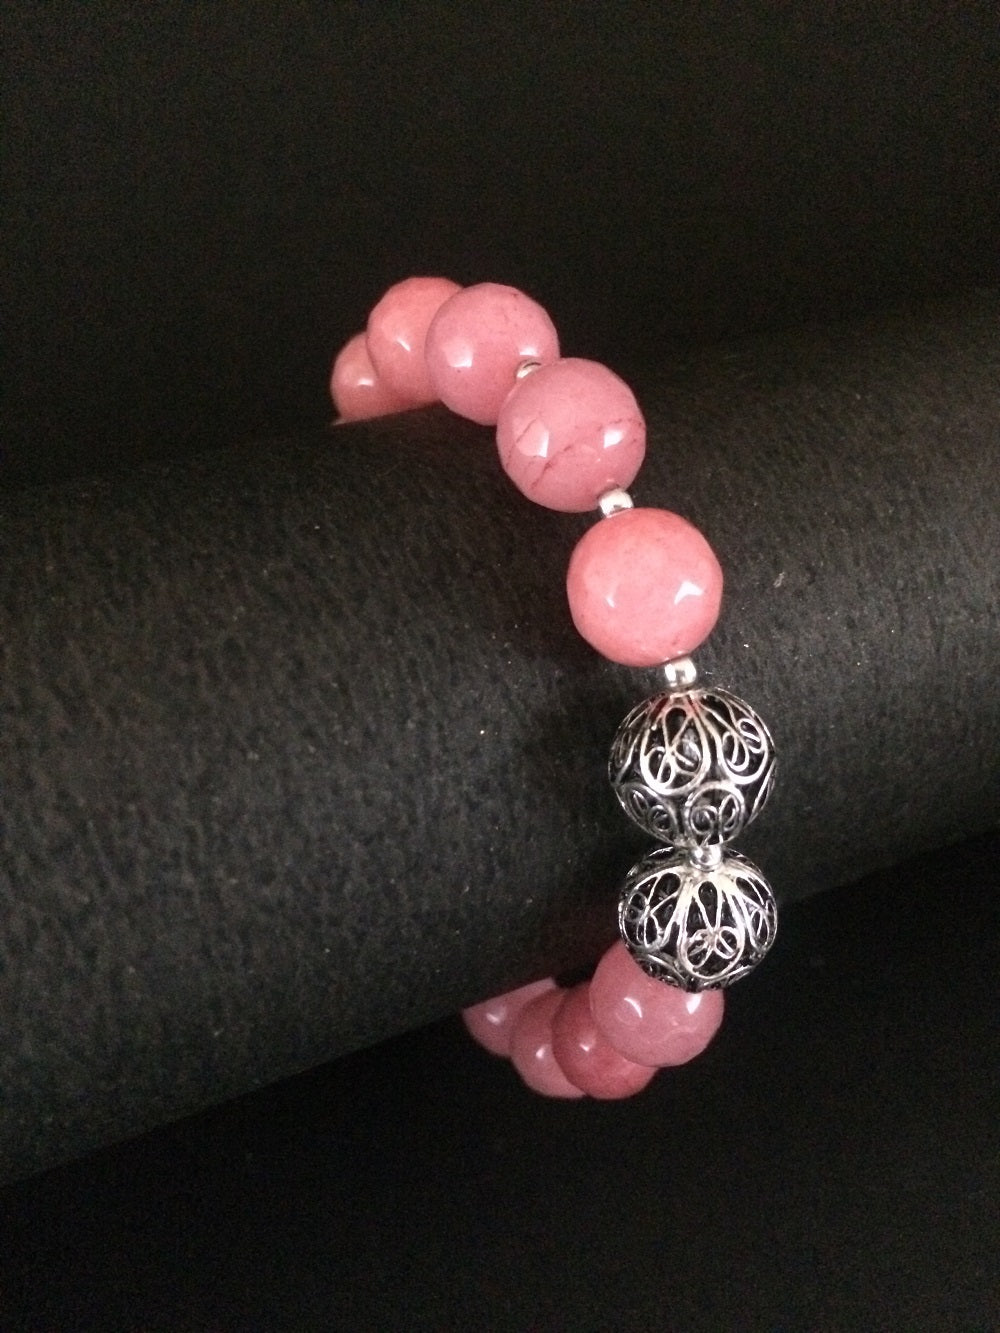 Pinks beads bracelet online